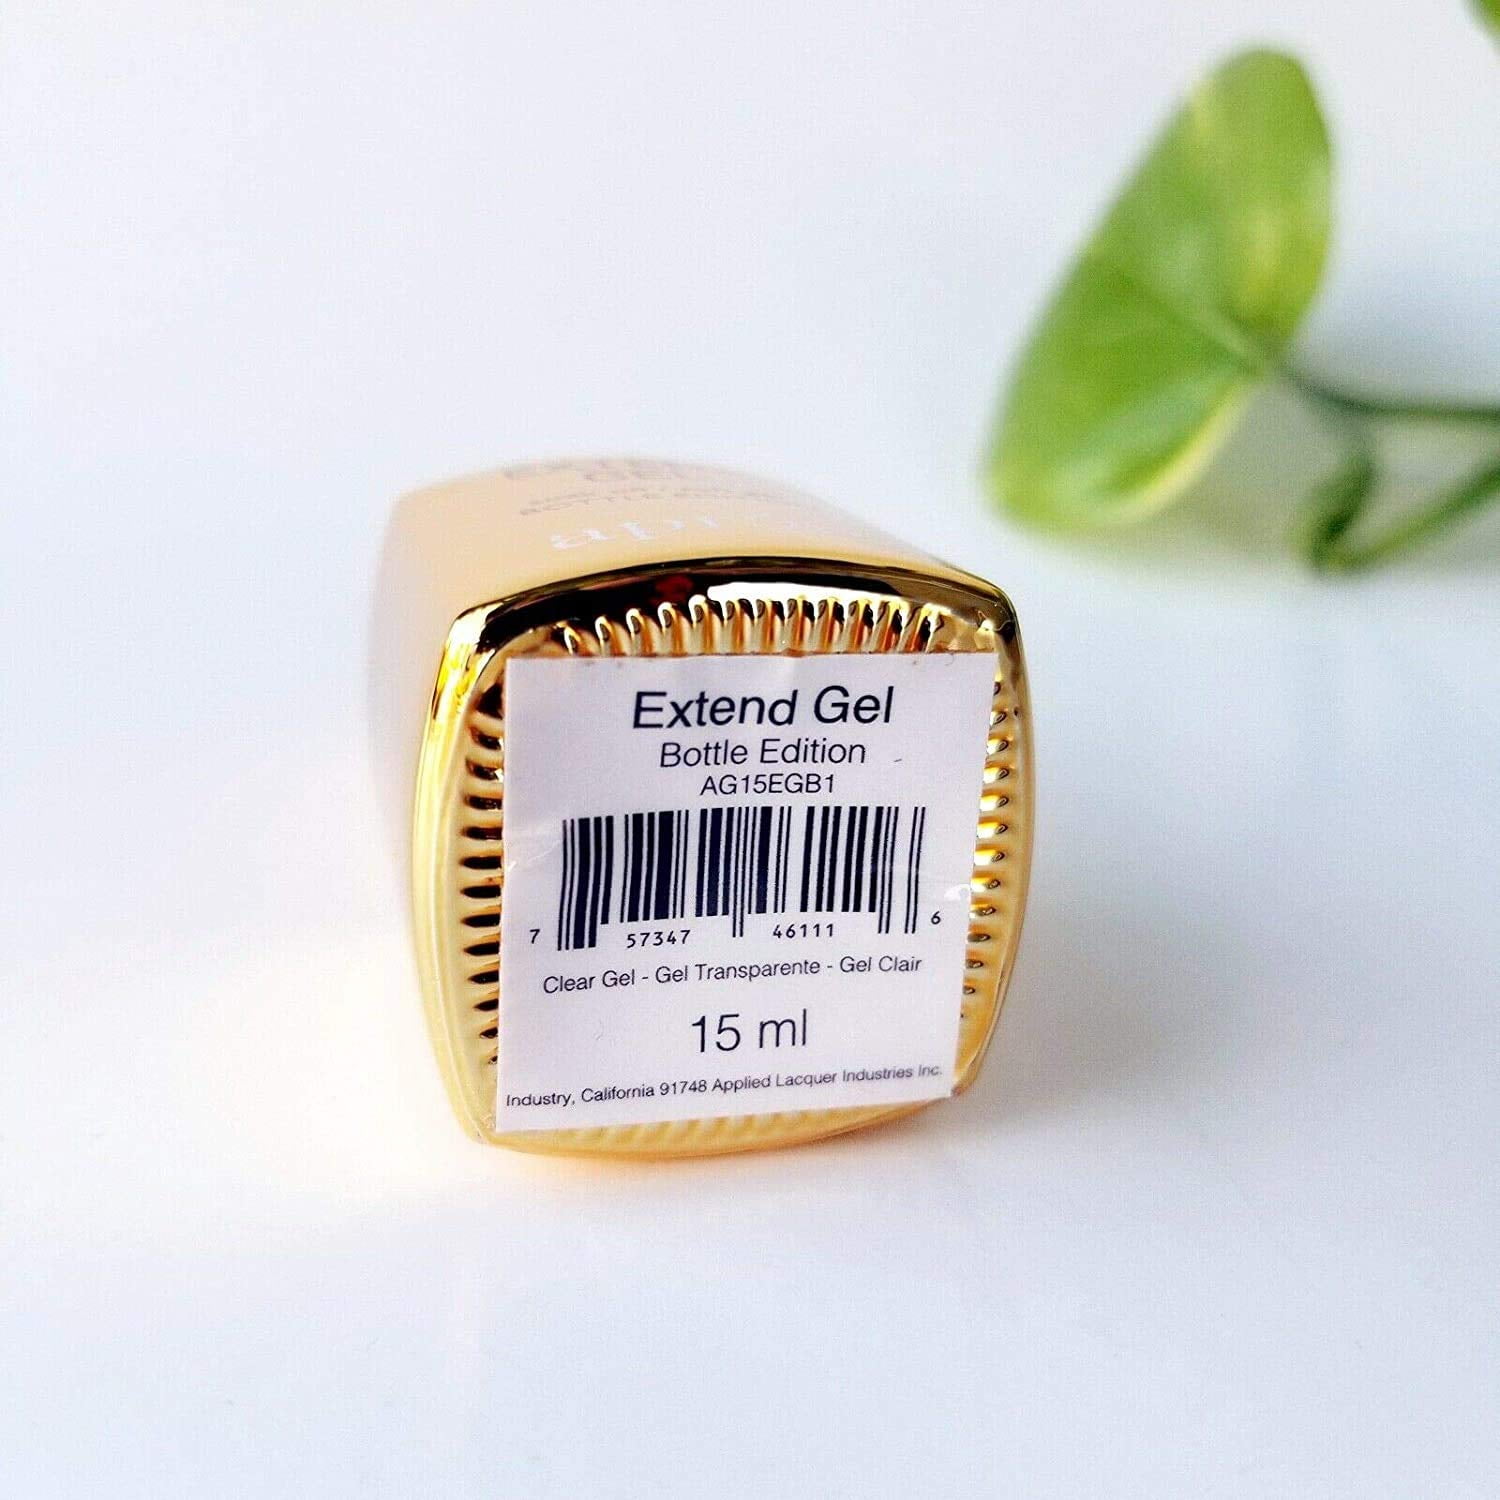 Aprés Extend Gel Gold Bottle Edition - Gel-X Tips Adhesive (15 ml)